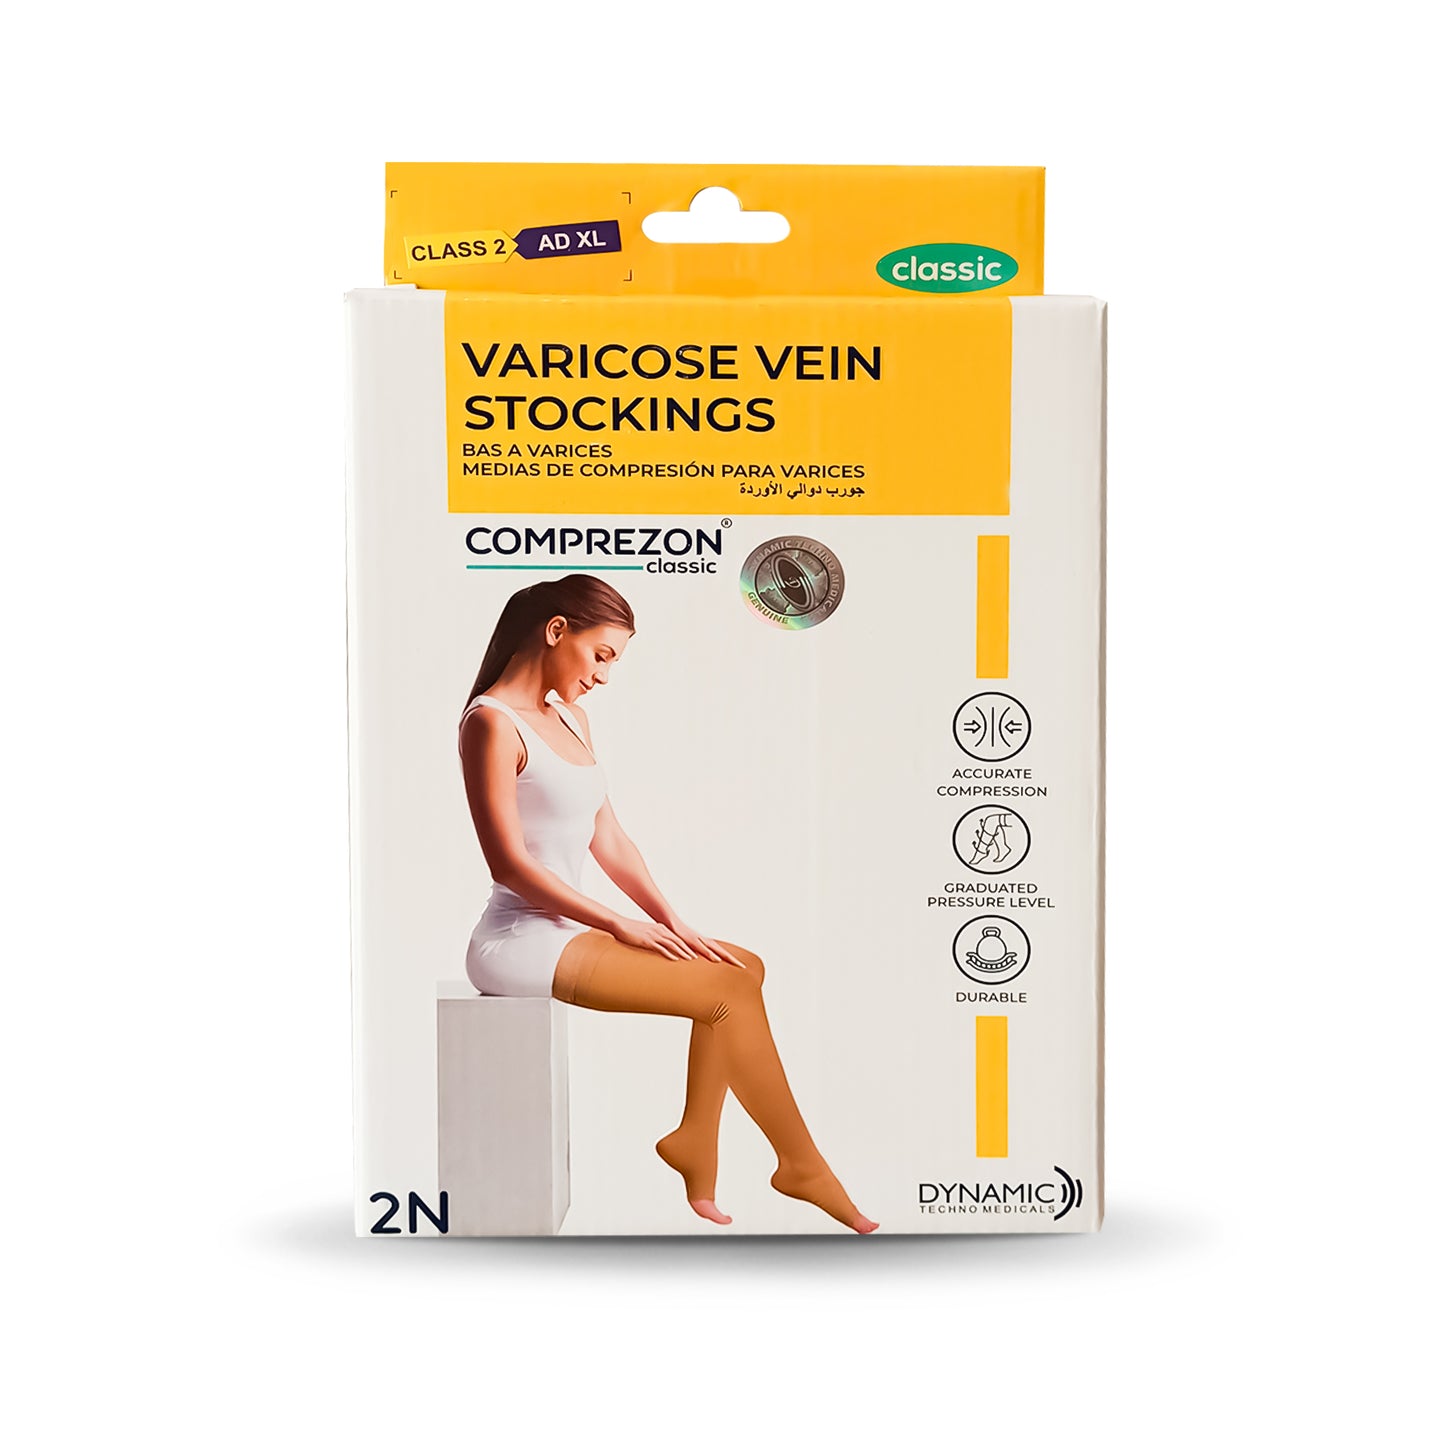 Buy Comprezon Classic Varicose Vein Stockings Class 2 Above Knee Online -  5% Off!